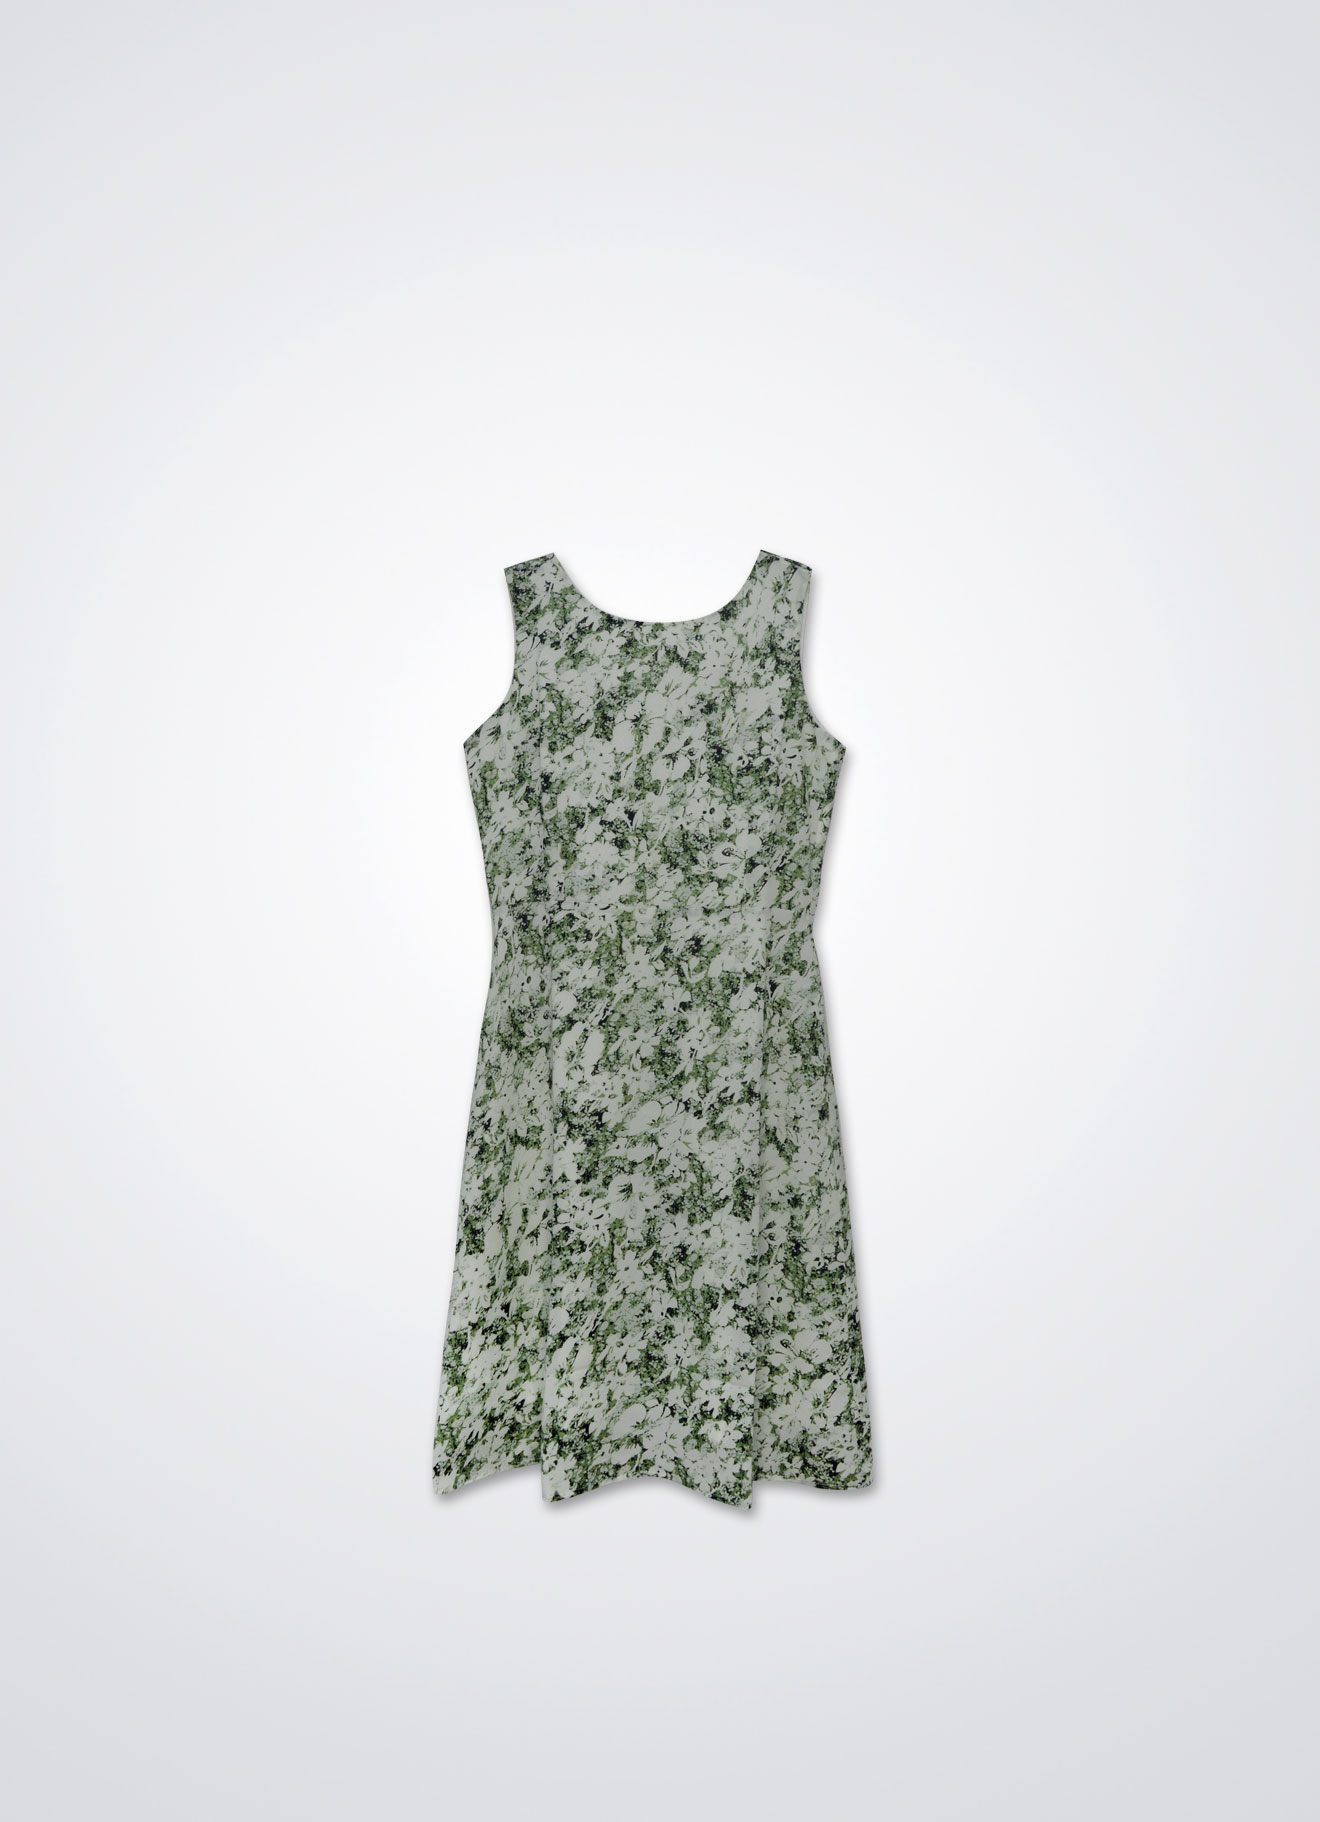 Aspen-Green by Sleeveless Dress